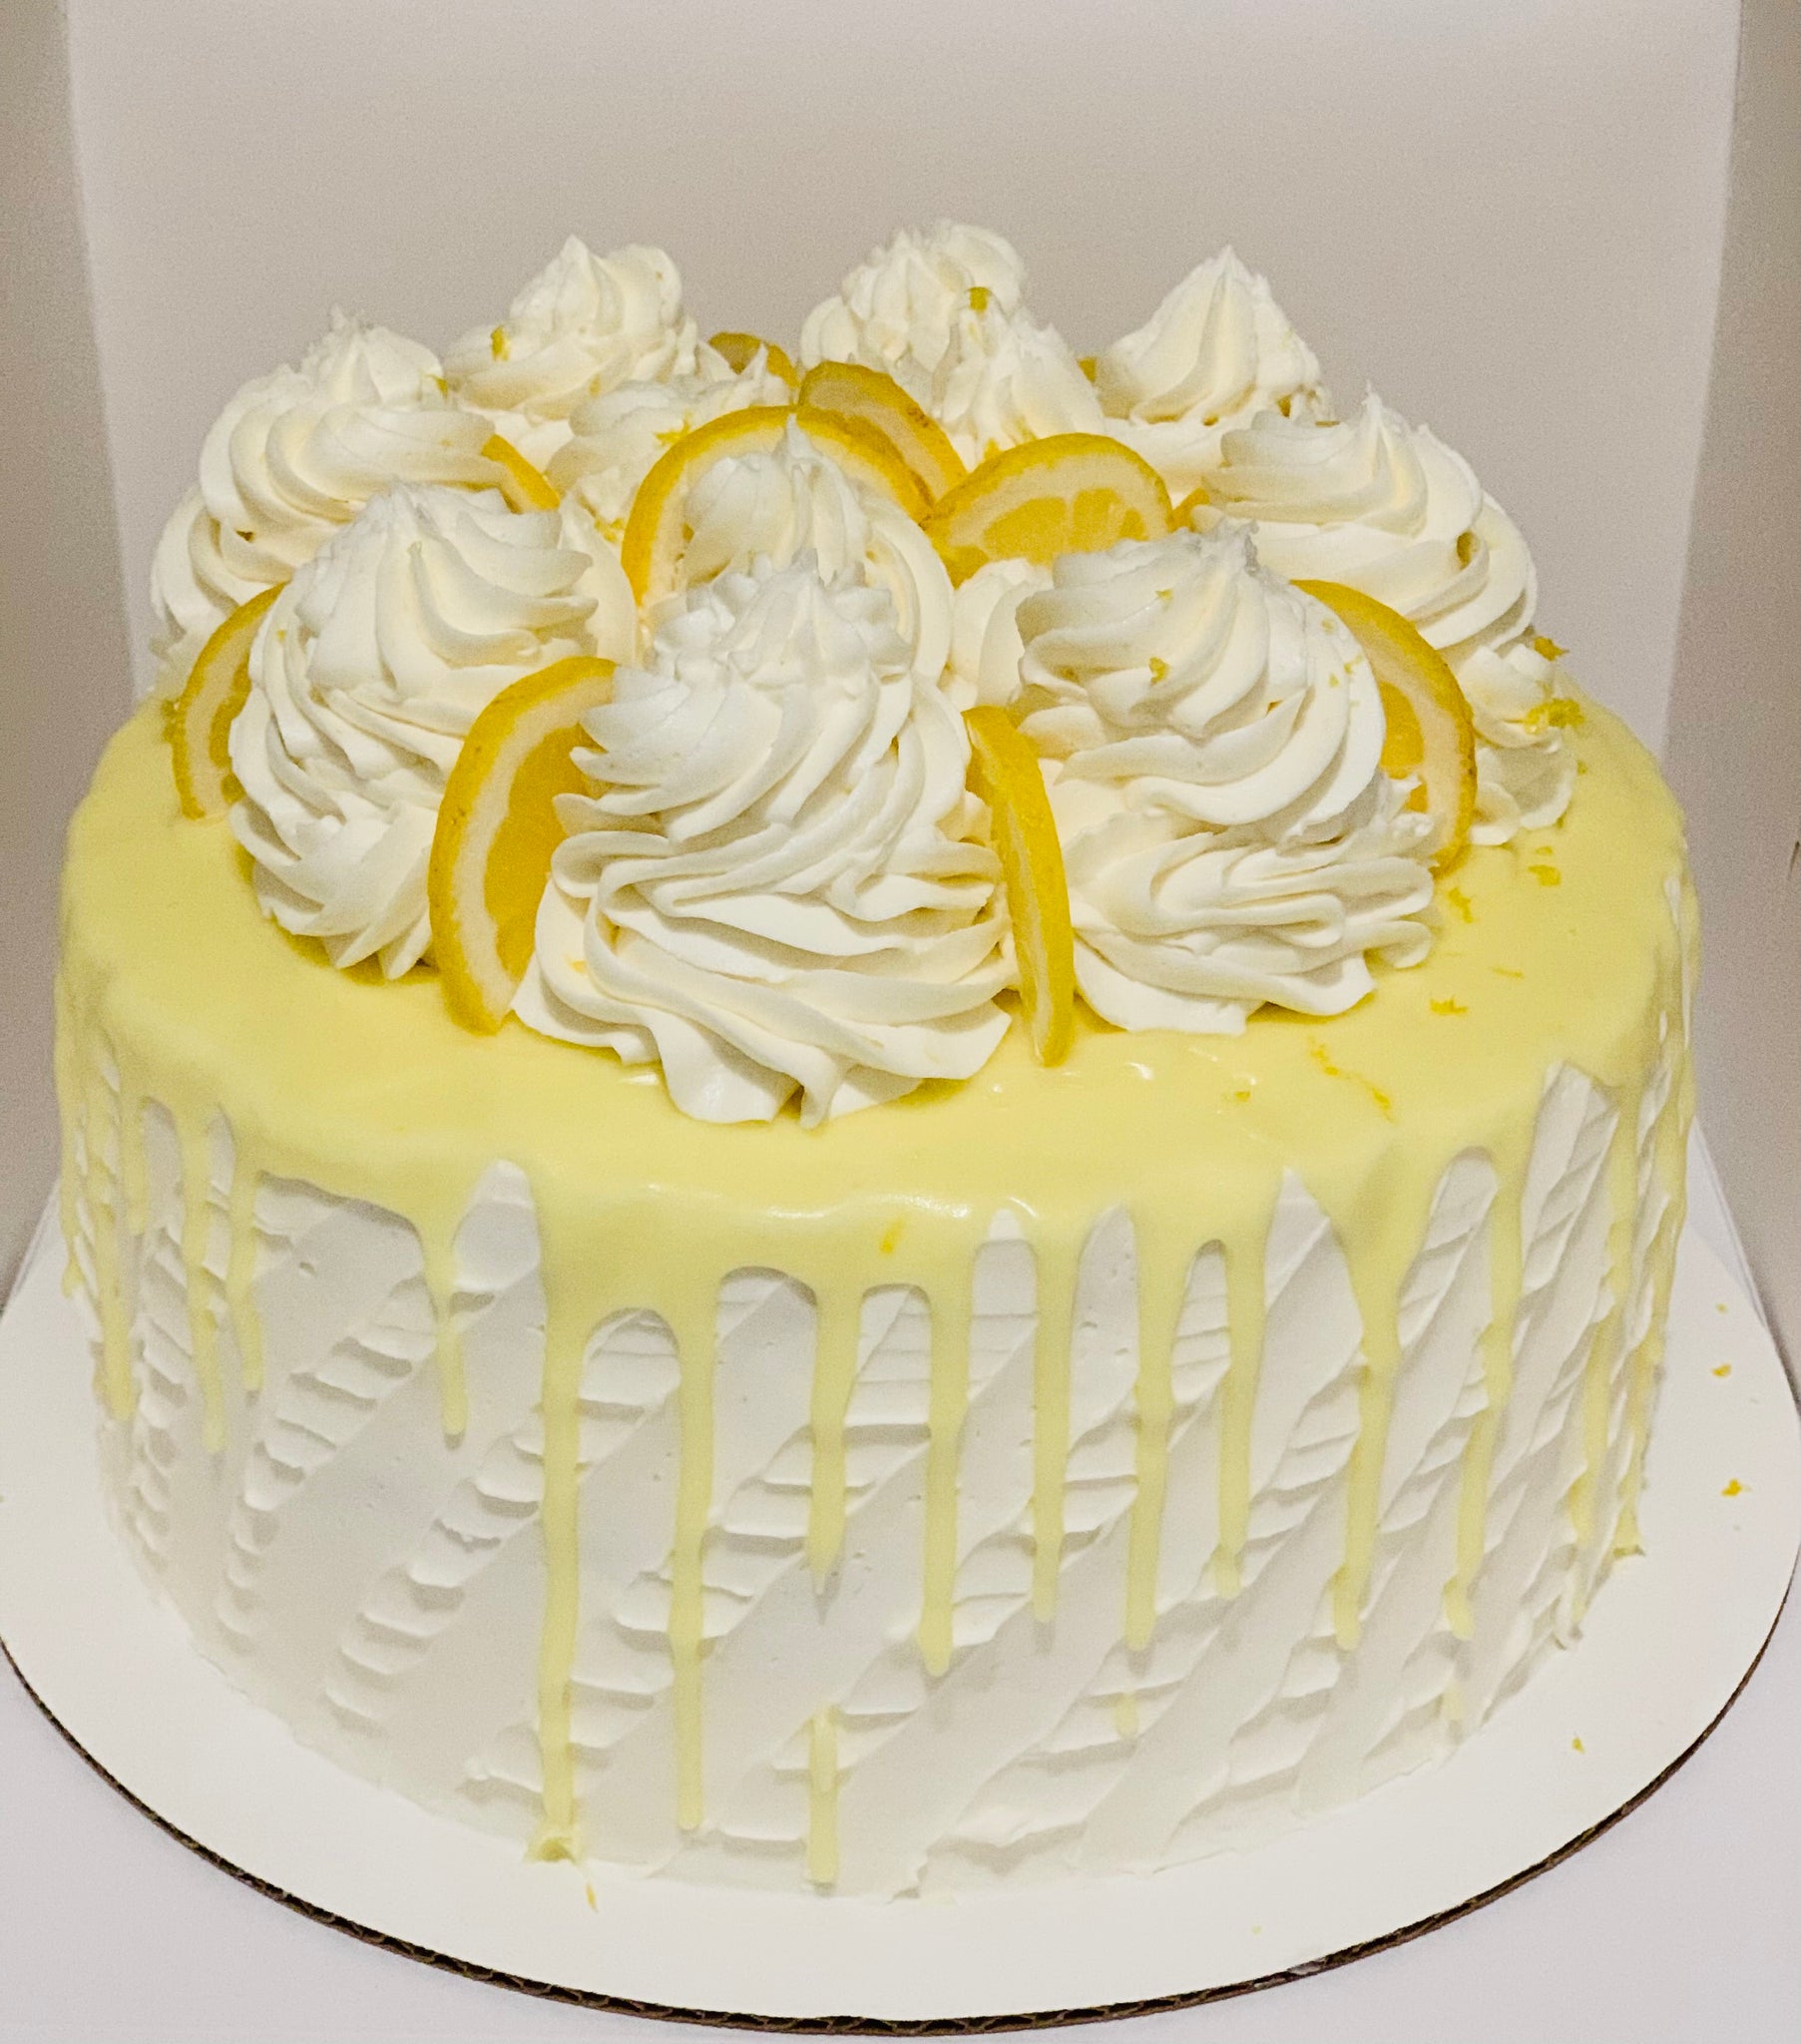 Fun sunny drip cake to brighten your day! #yellow #cake #decoration  #yellowcakedecoration | Simple cake designs, Easy cake decorating, Drip  cakes